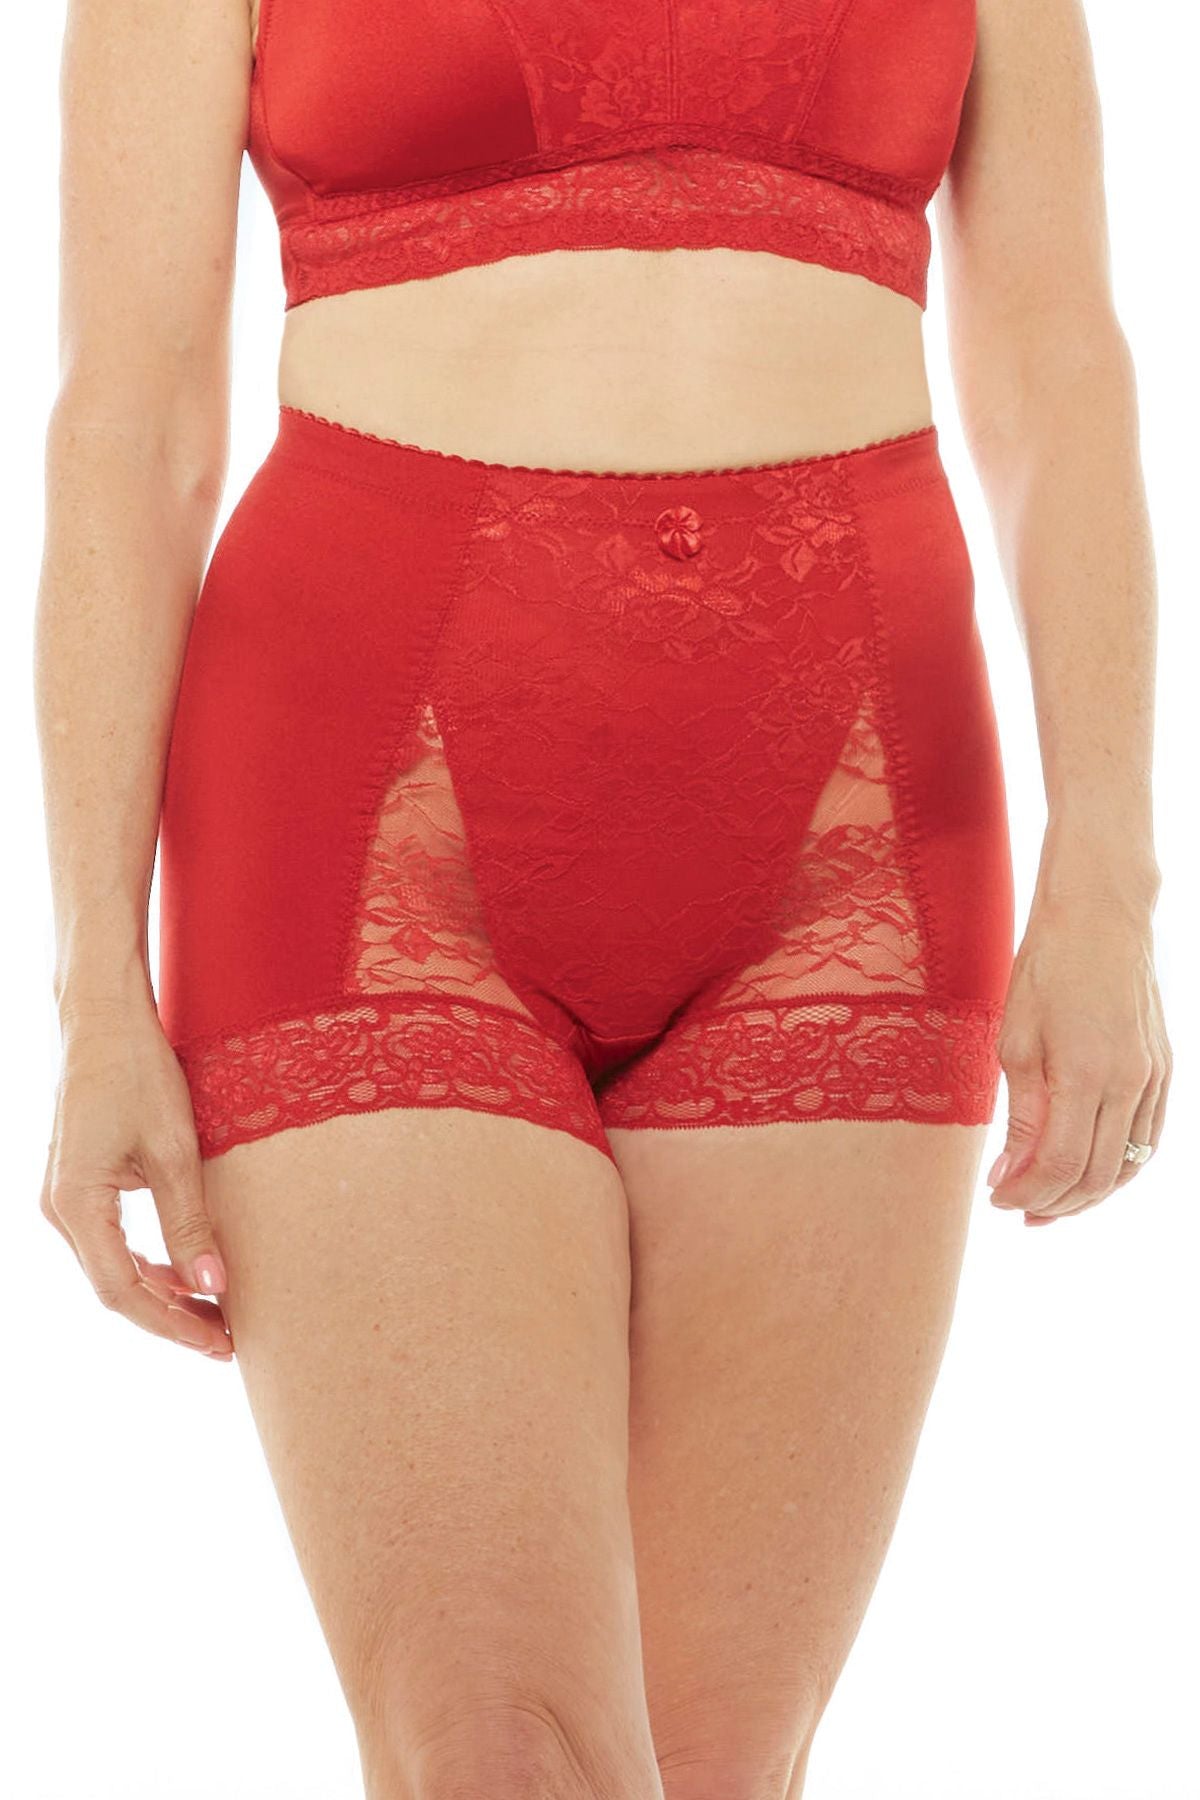 Rhonda Shear Control Underwear Women's New Comfy Panties Rose Pink Size  Medium